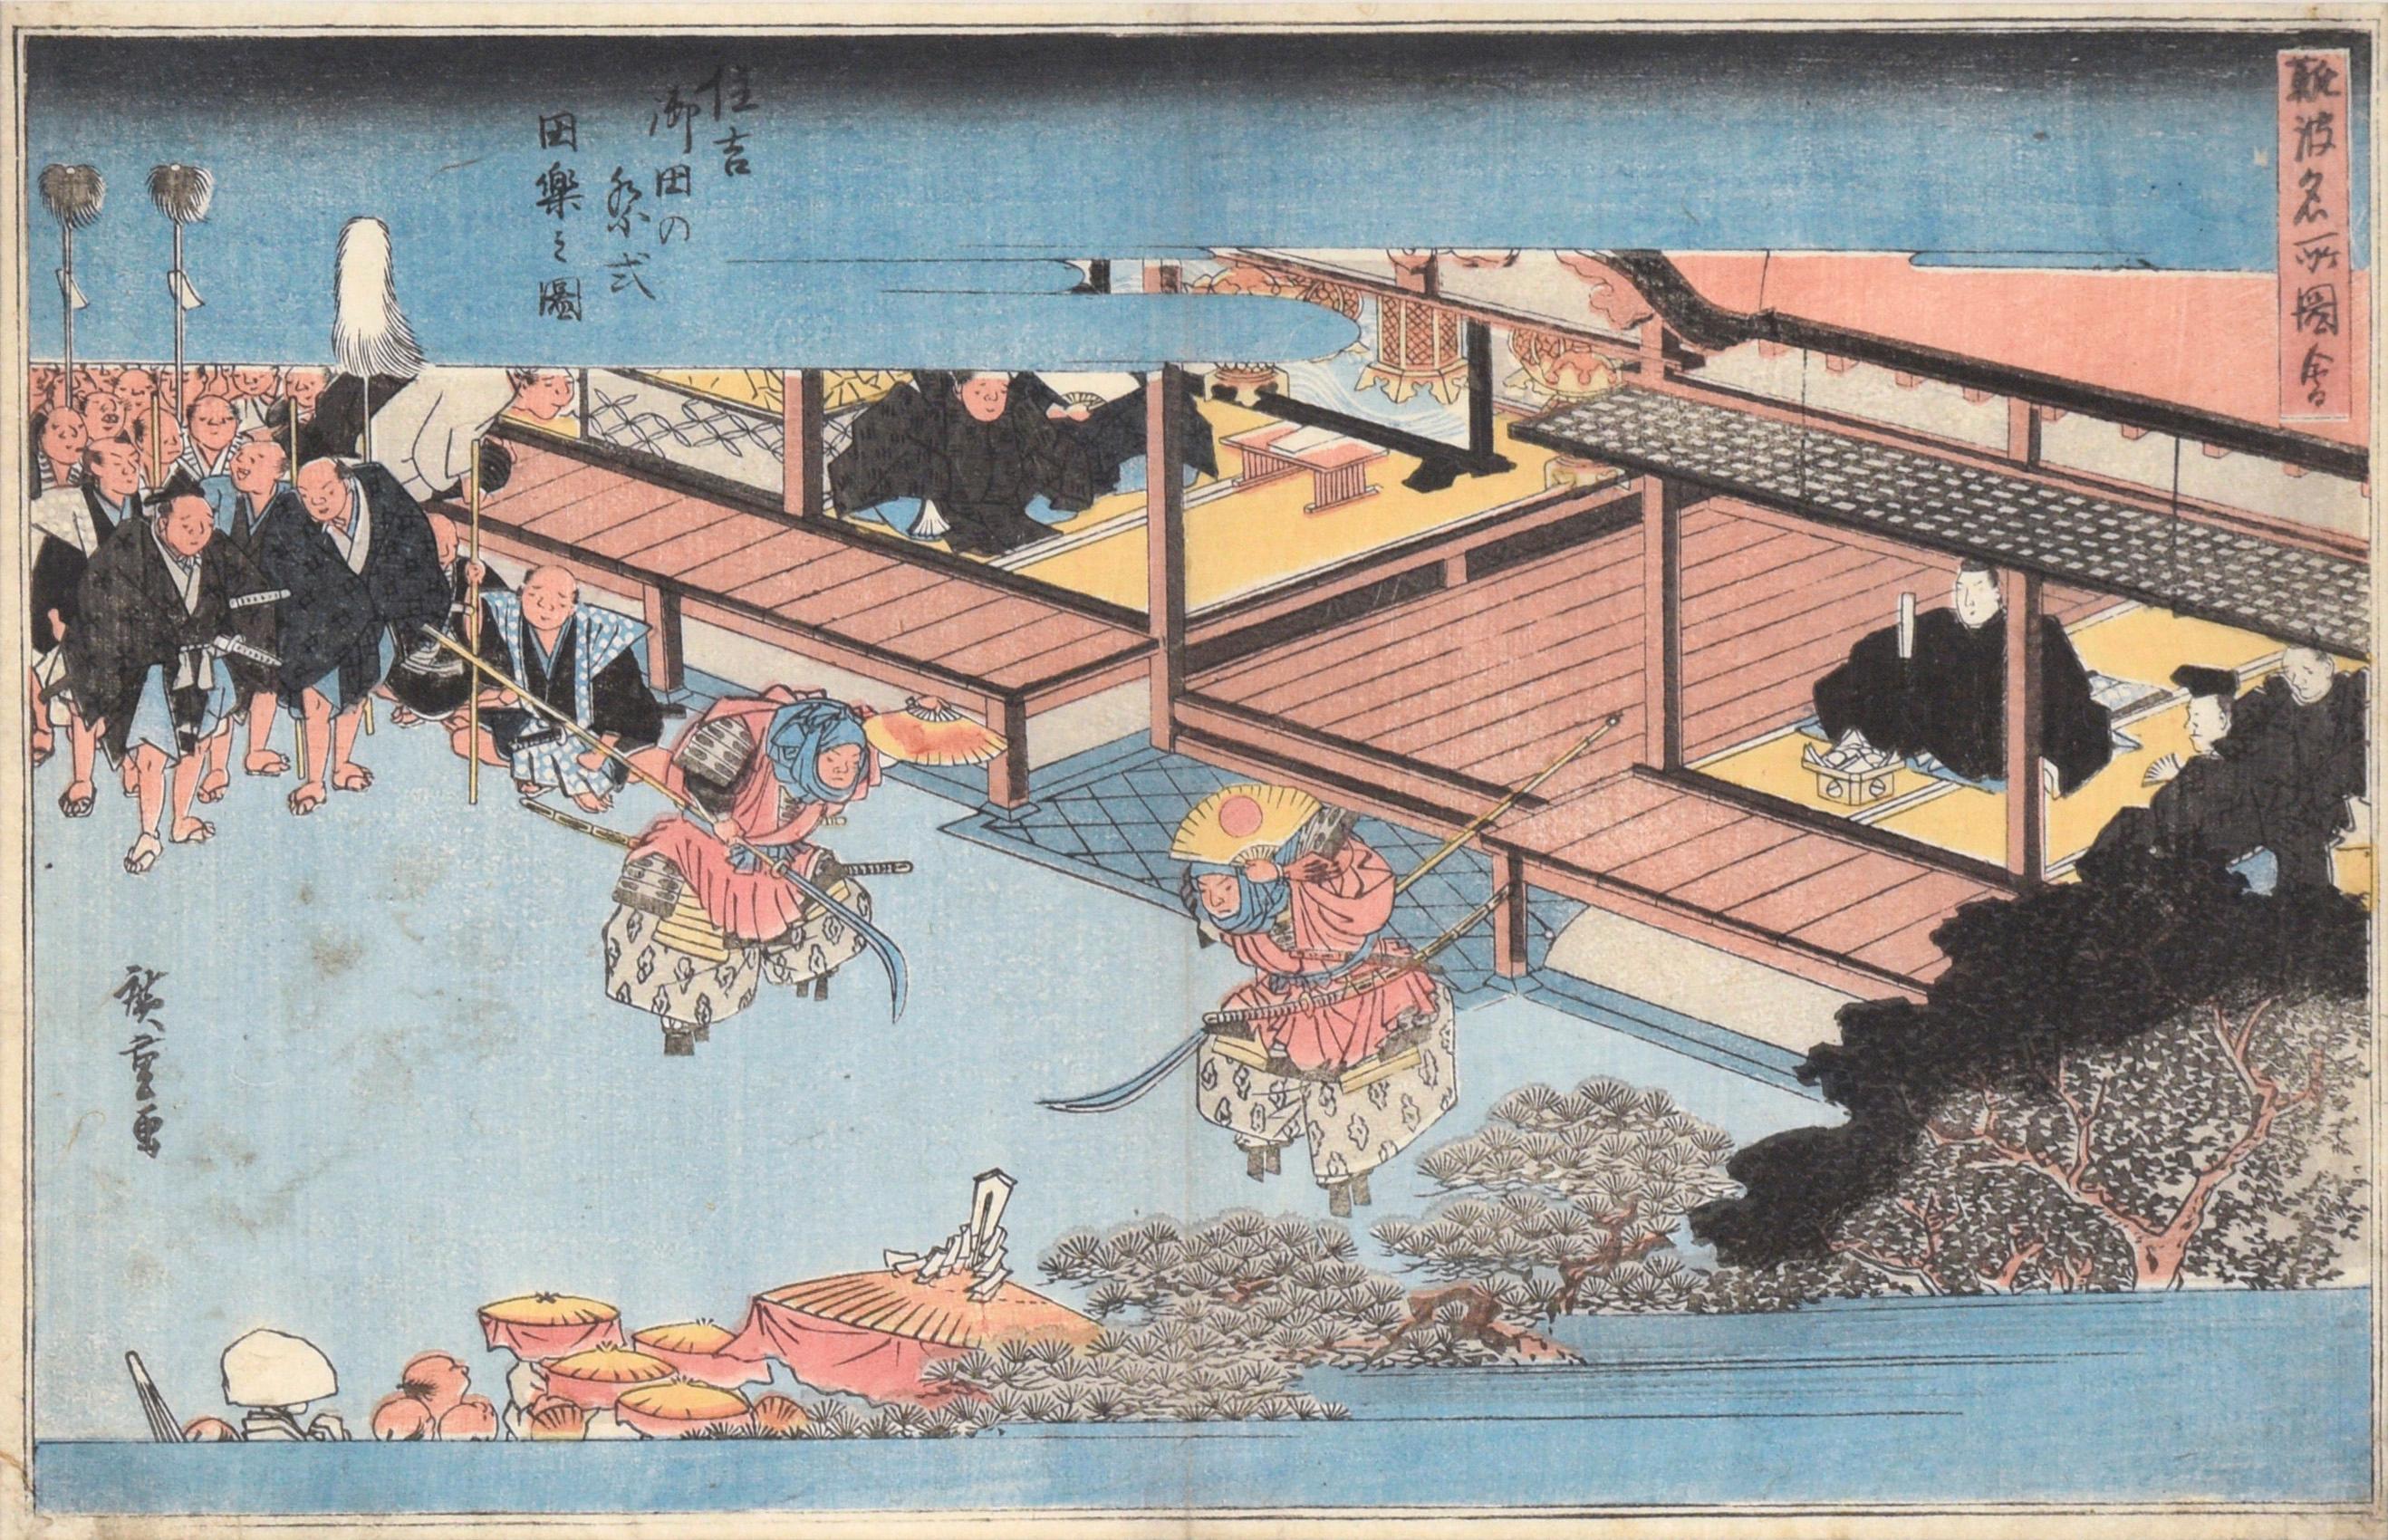 Sumiyoshi : danse de Dengaku exécutée lors d'une cérémonie Onda - gravure sur bois - Print de Utagawa Hiroshige